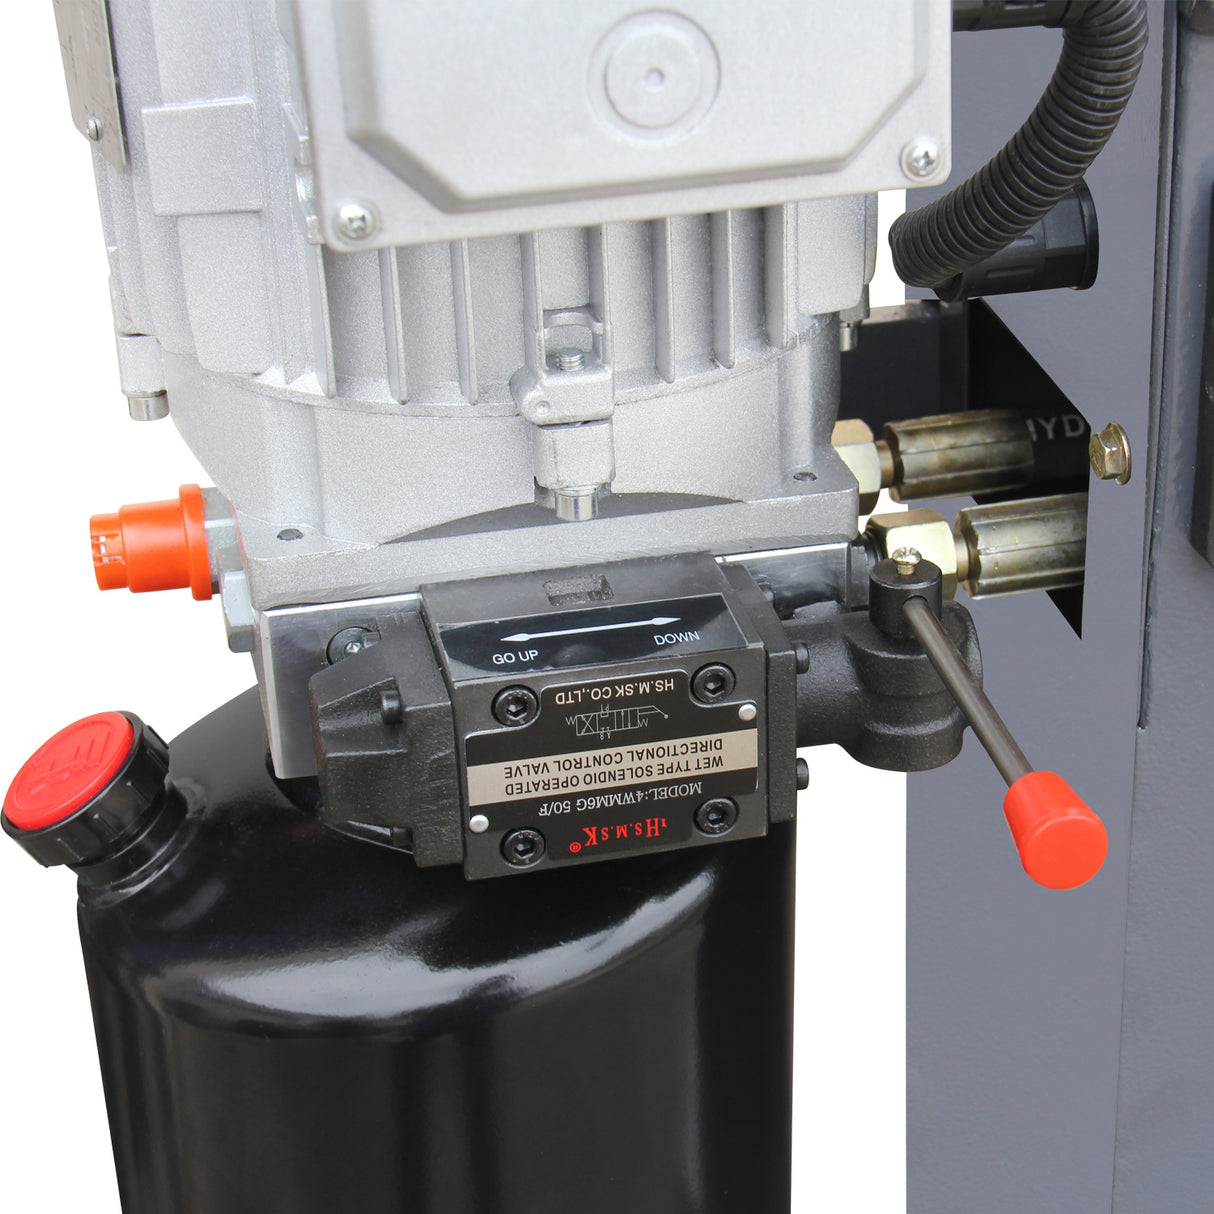 KAKA INDUSTRIAL HP-25 Electric Hydraulic Press，Hydraulic Electric Pump, H-Frame Shop Press with Gear pump,25 ton Frame Capacity,9.8 in Stroke 220V Single phase